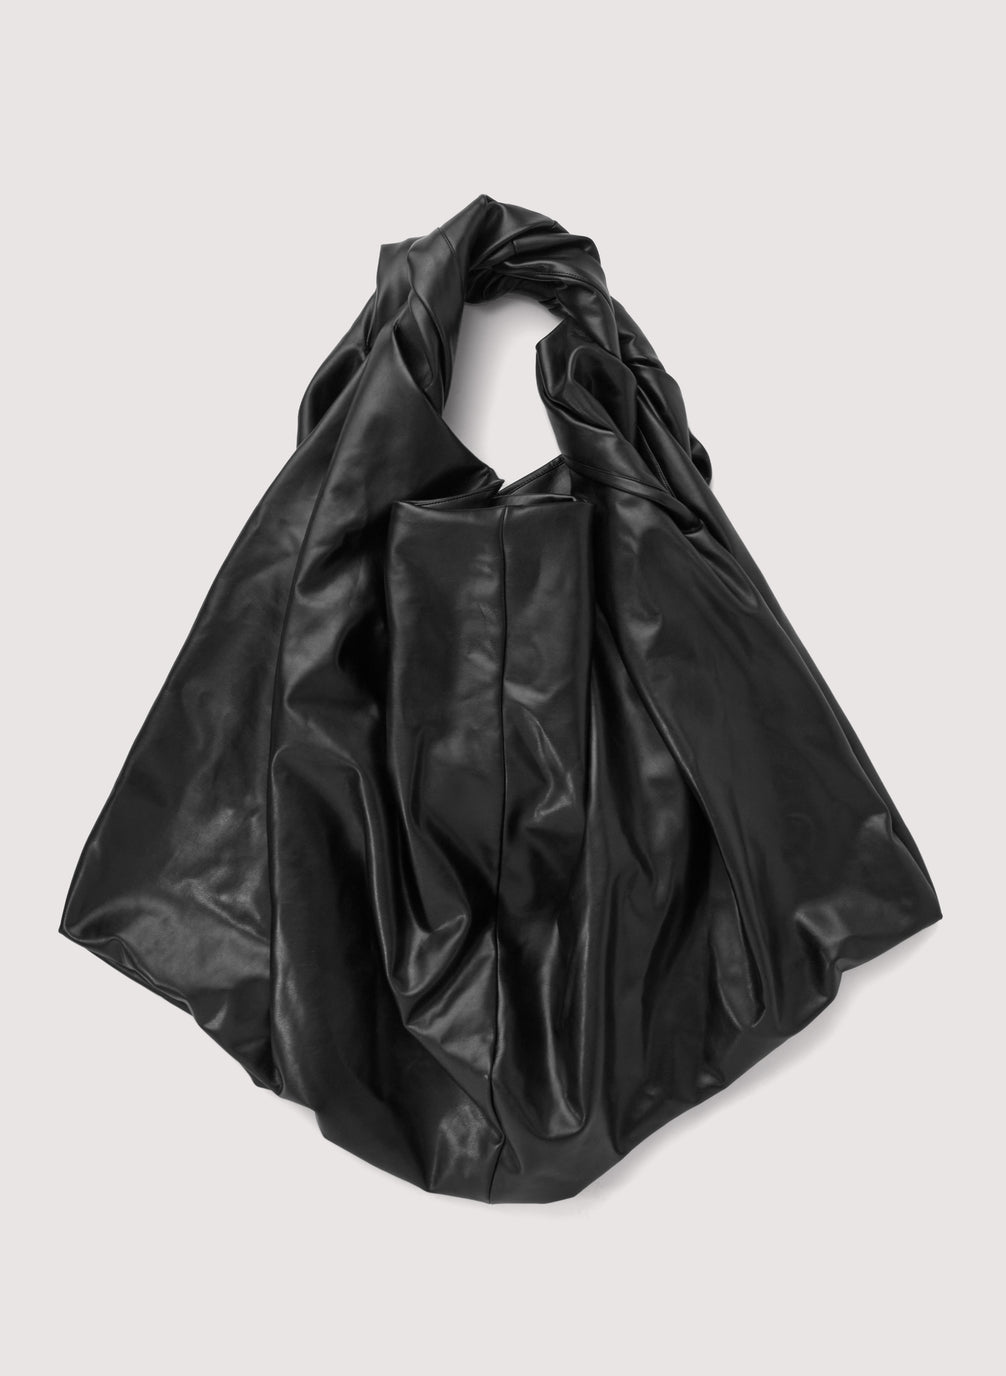 flat lay view of black vegan leather medium length top handle bag with large rectangular base